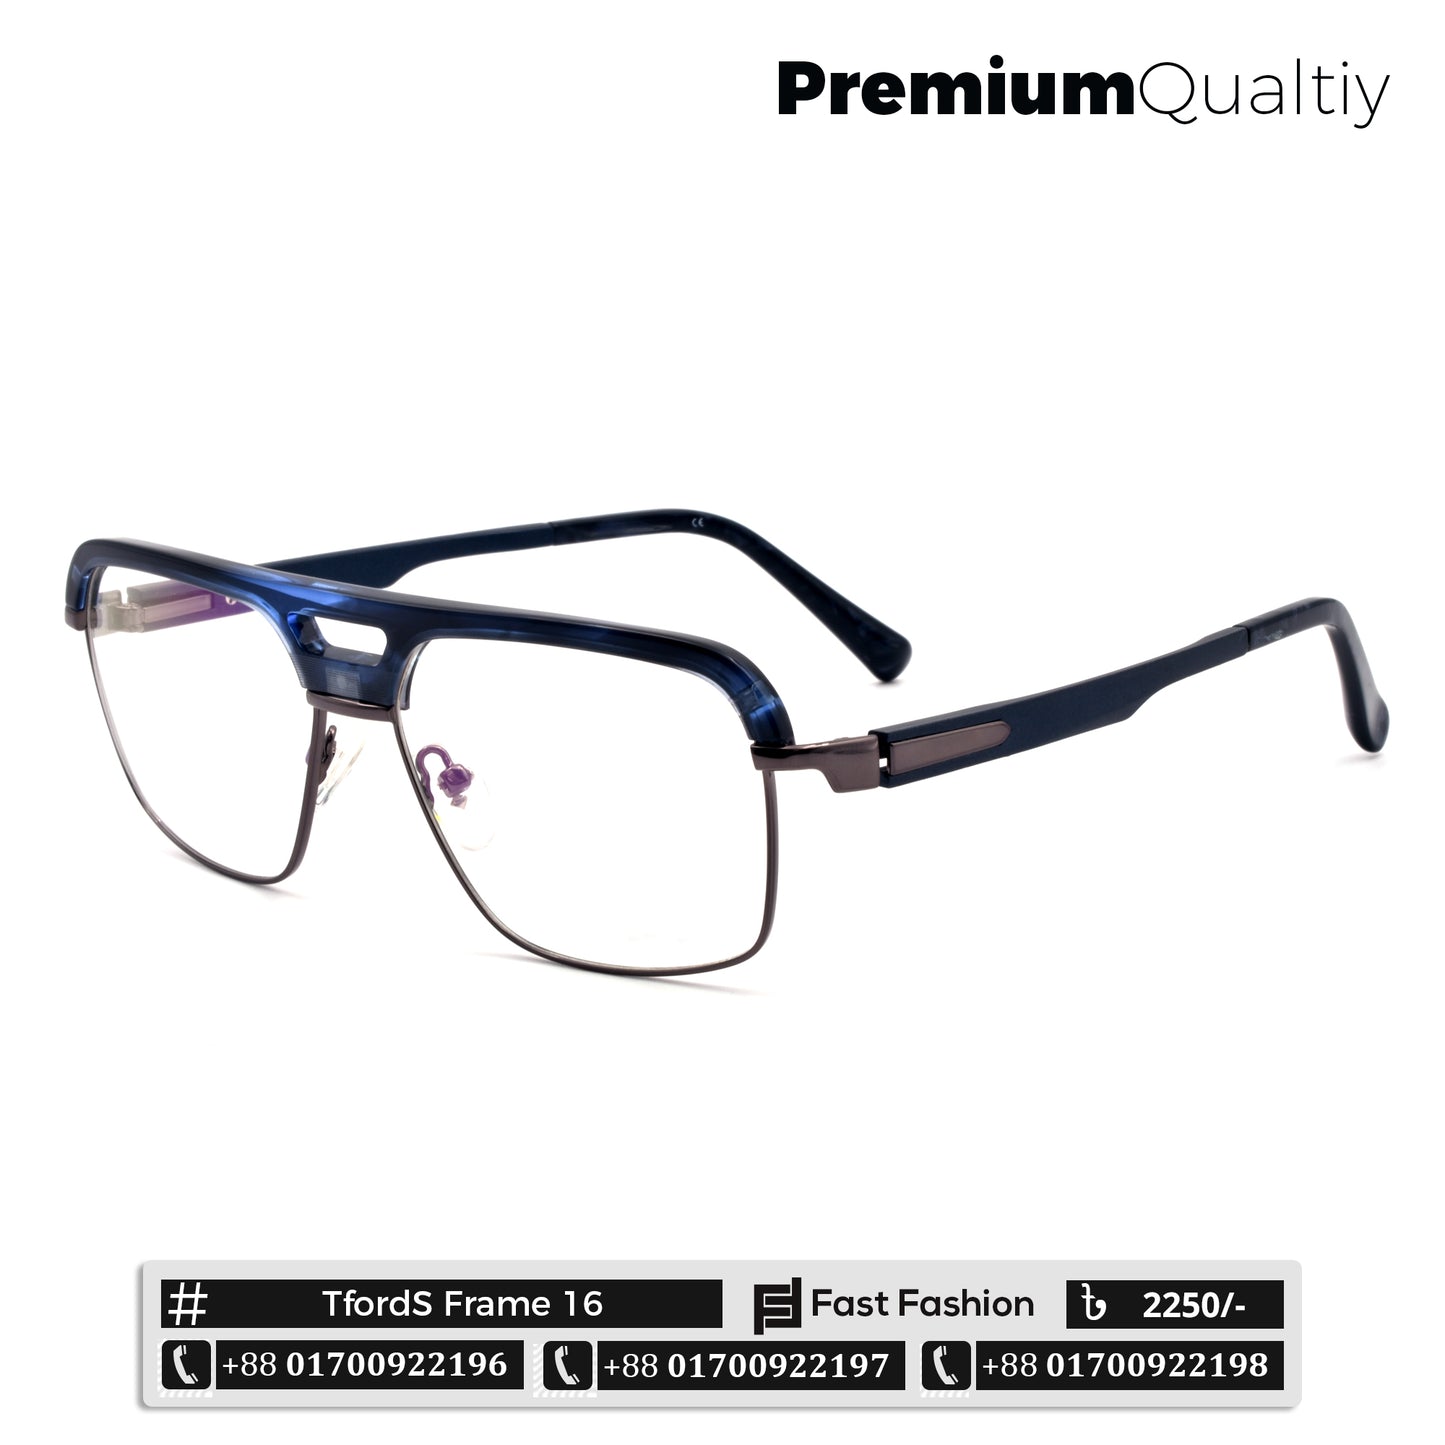 Trendy Stylish Optic Frame | TFord Frame 16 | Premium Quality